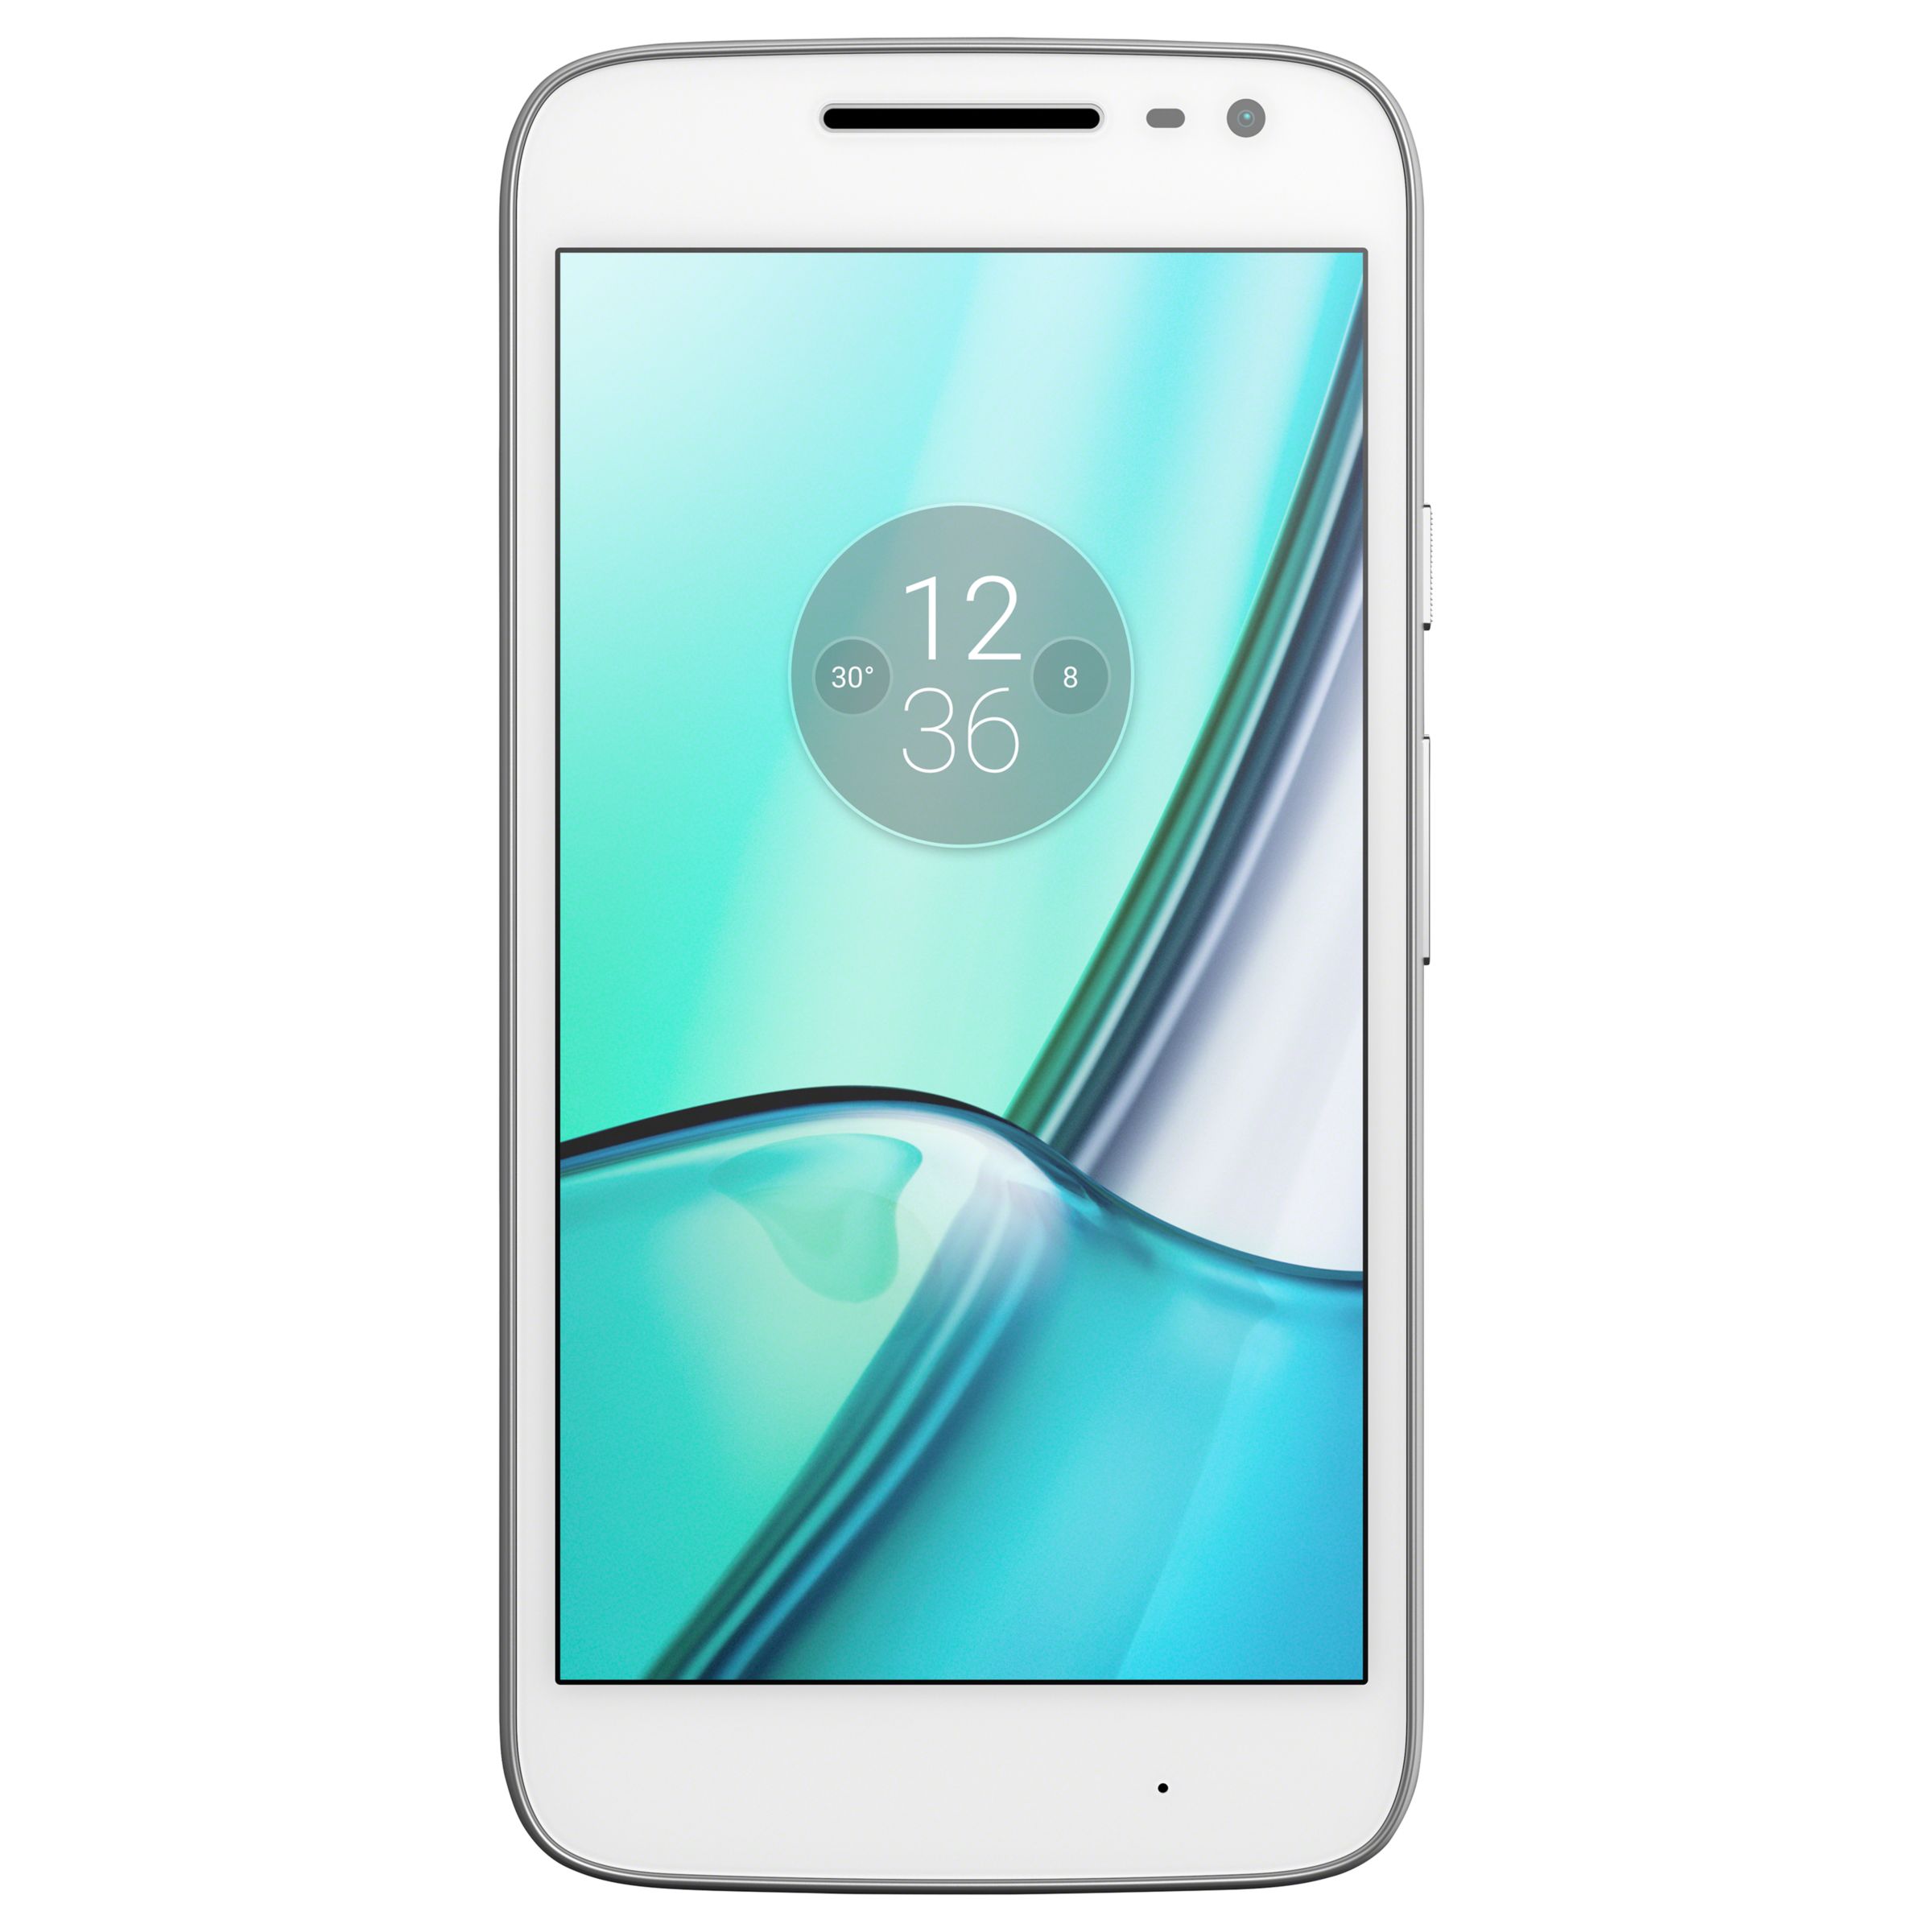 Moto G4 Play Smartphone, Android, 5", 4G LTE, SIM Free, 16GB